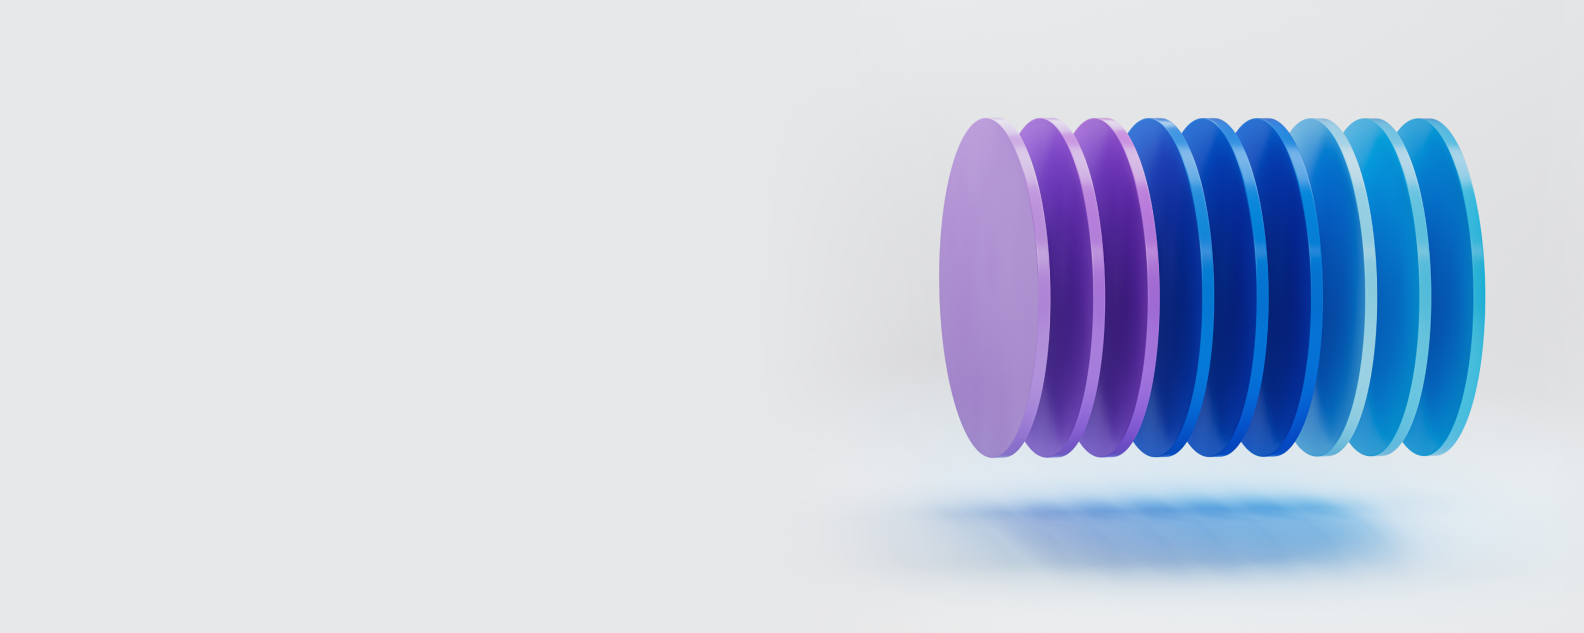 Illustration of purple, blue, light blue discs stacked horizontally